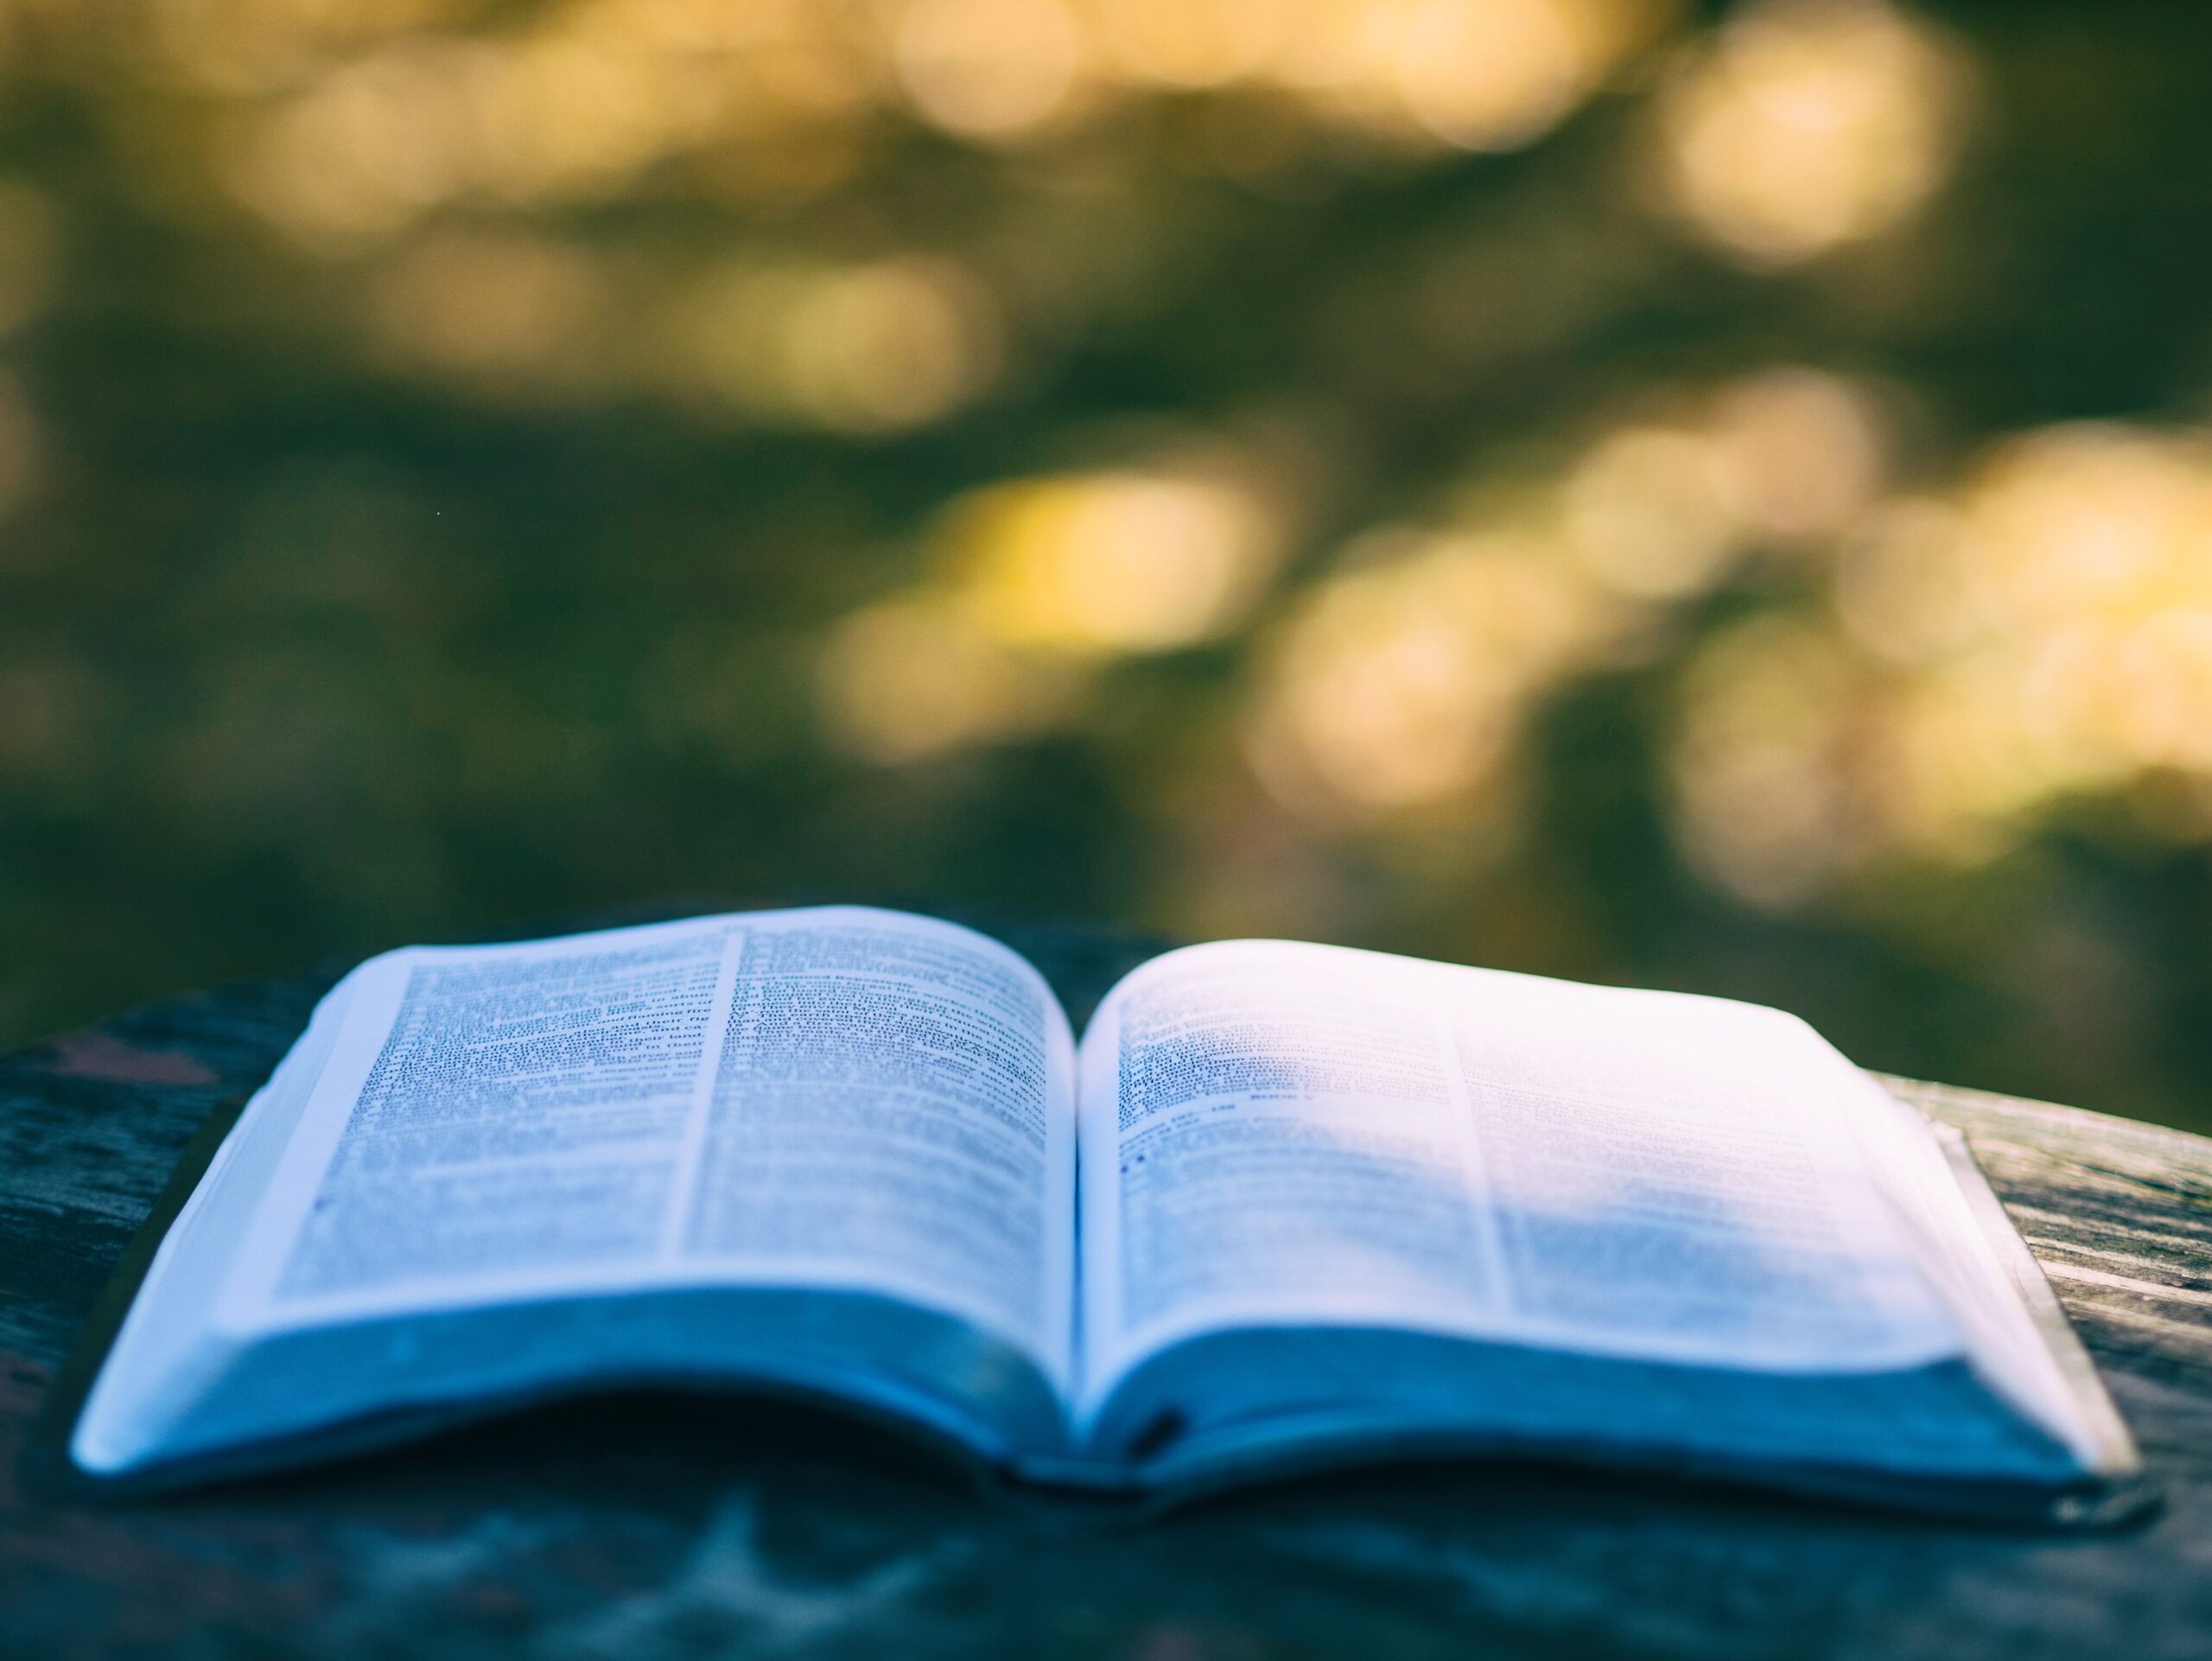 Exploring Moral Teachings in the Bible